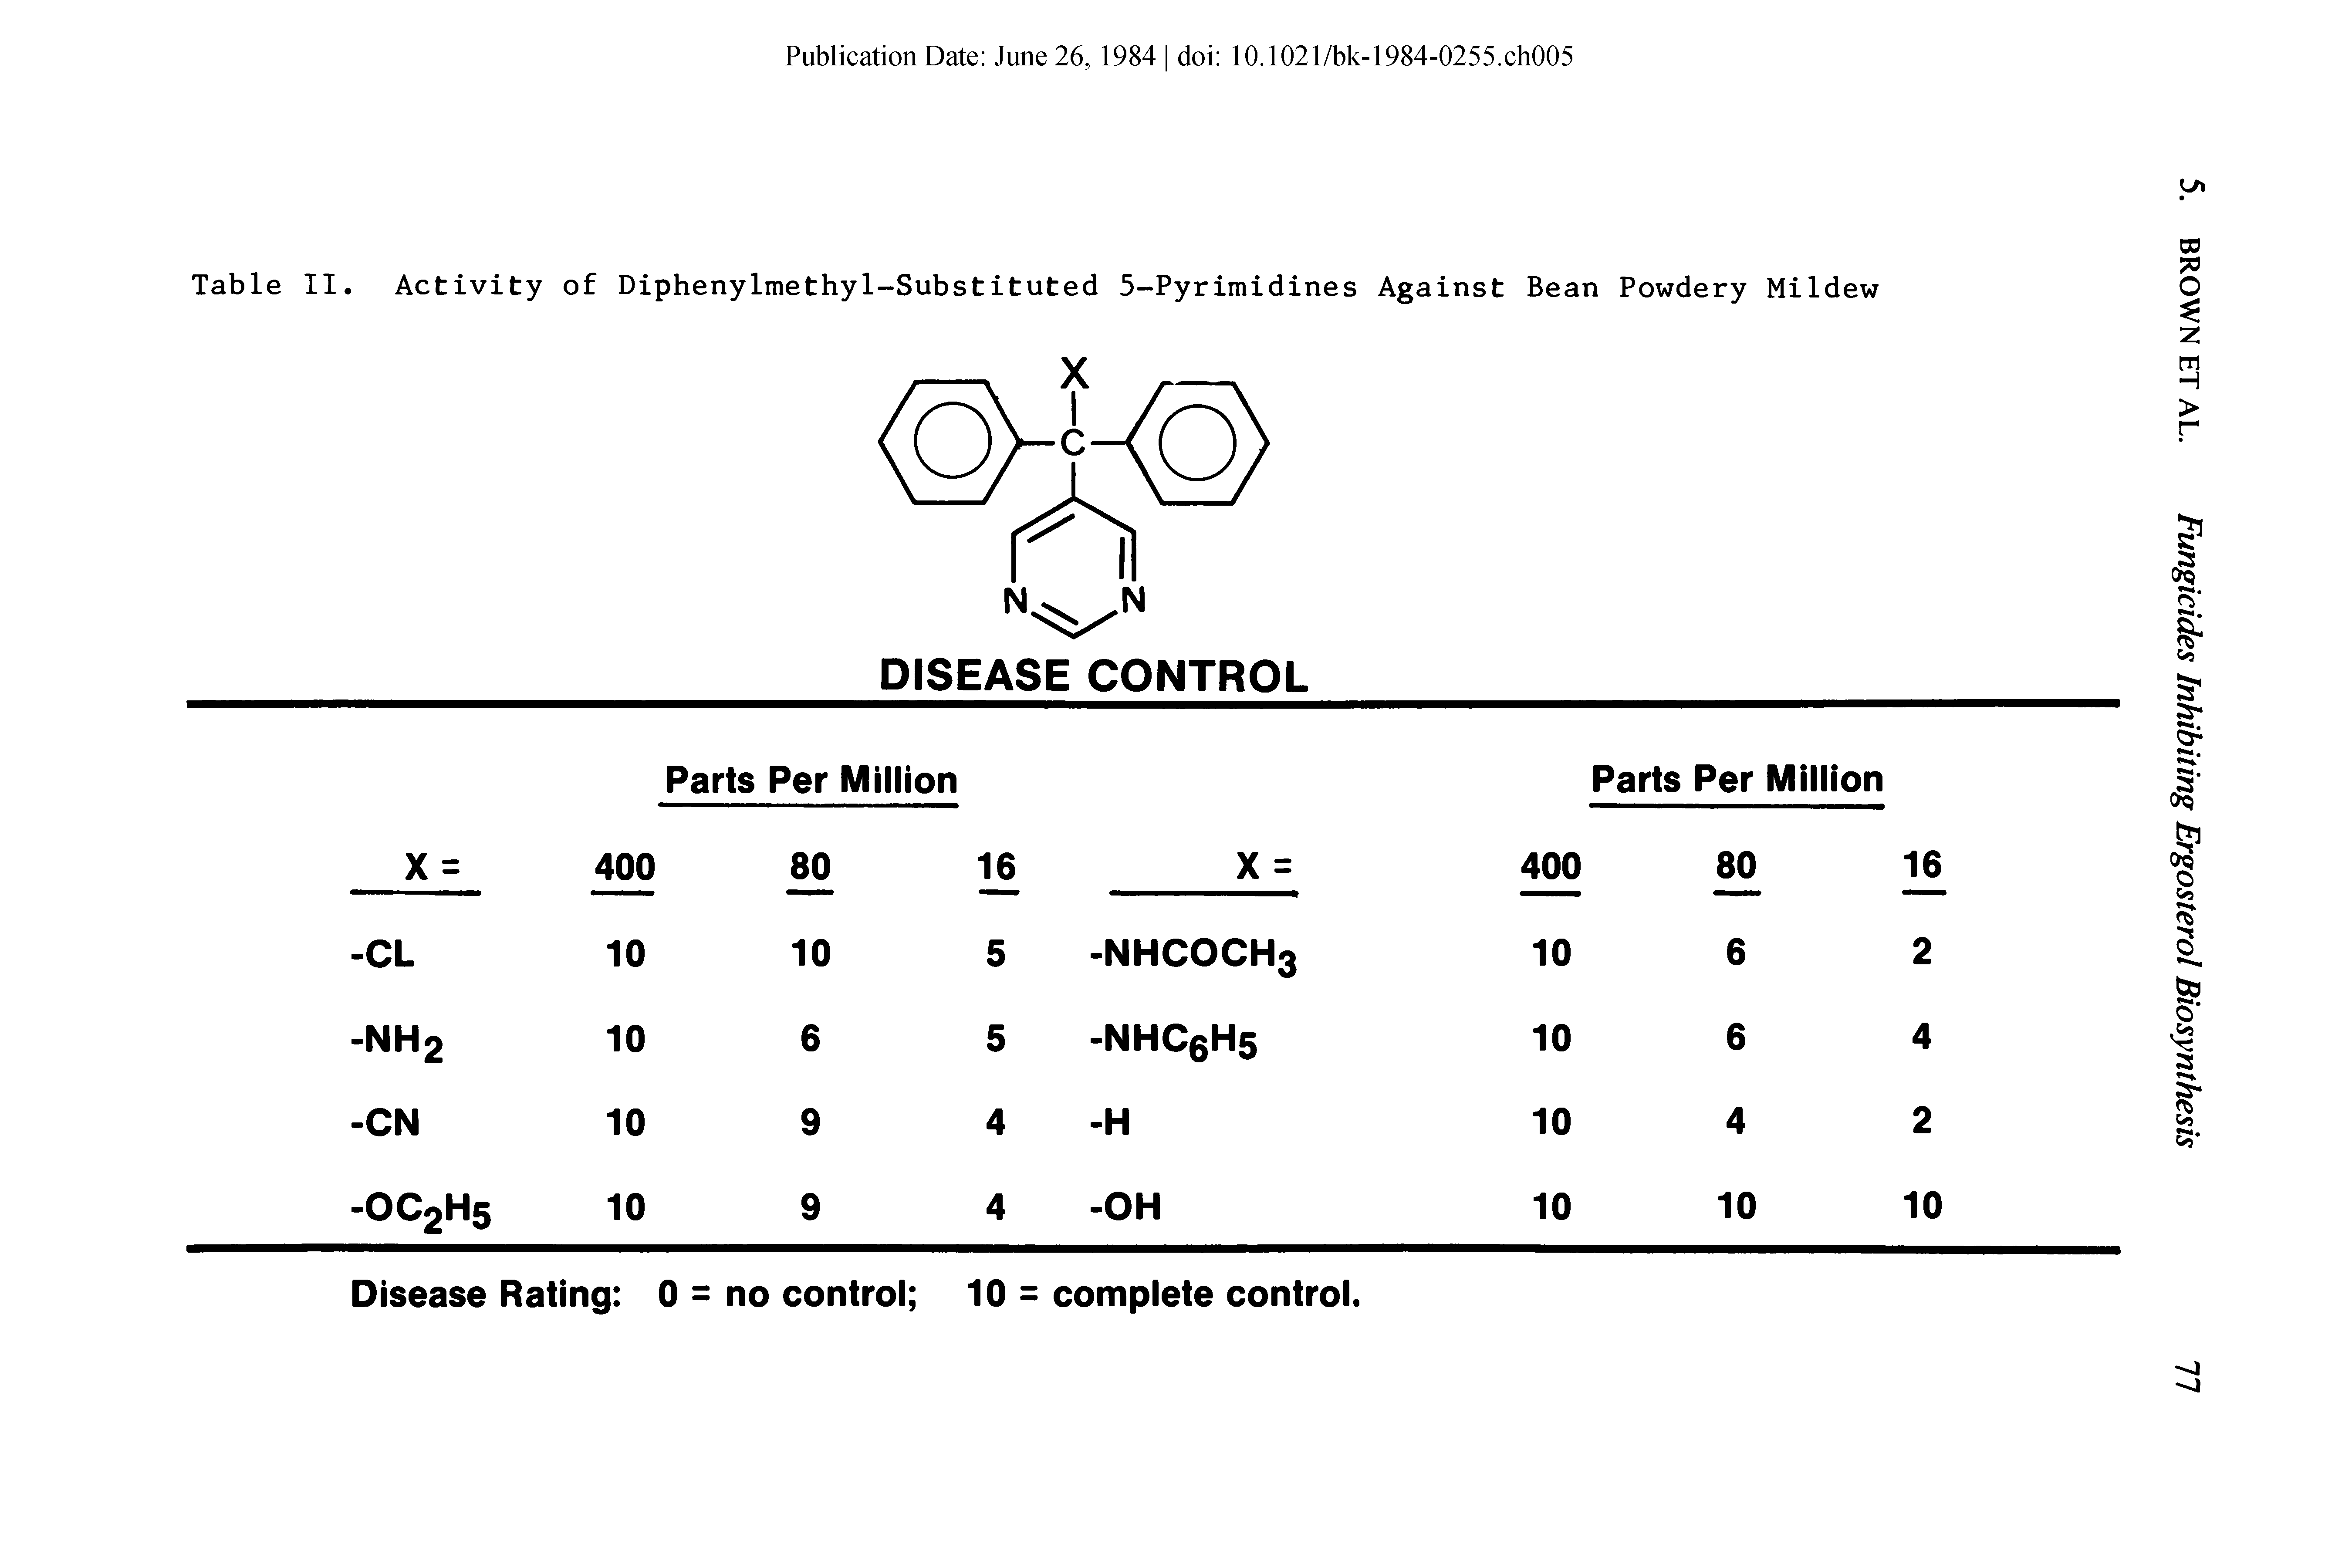 Table II. Activity of Diphenylmethyl-Substituted 5-Pyrimidines Against Bean Powdery Mildew...